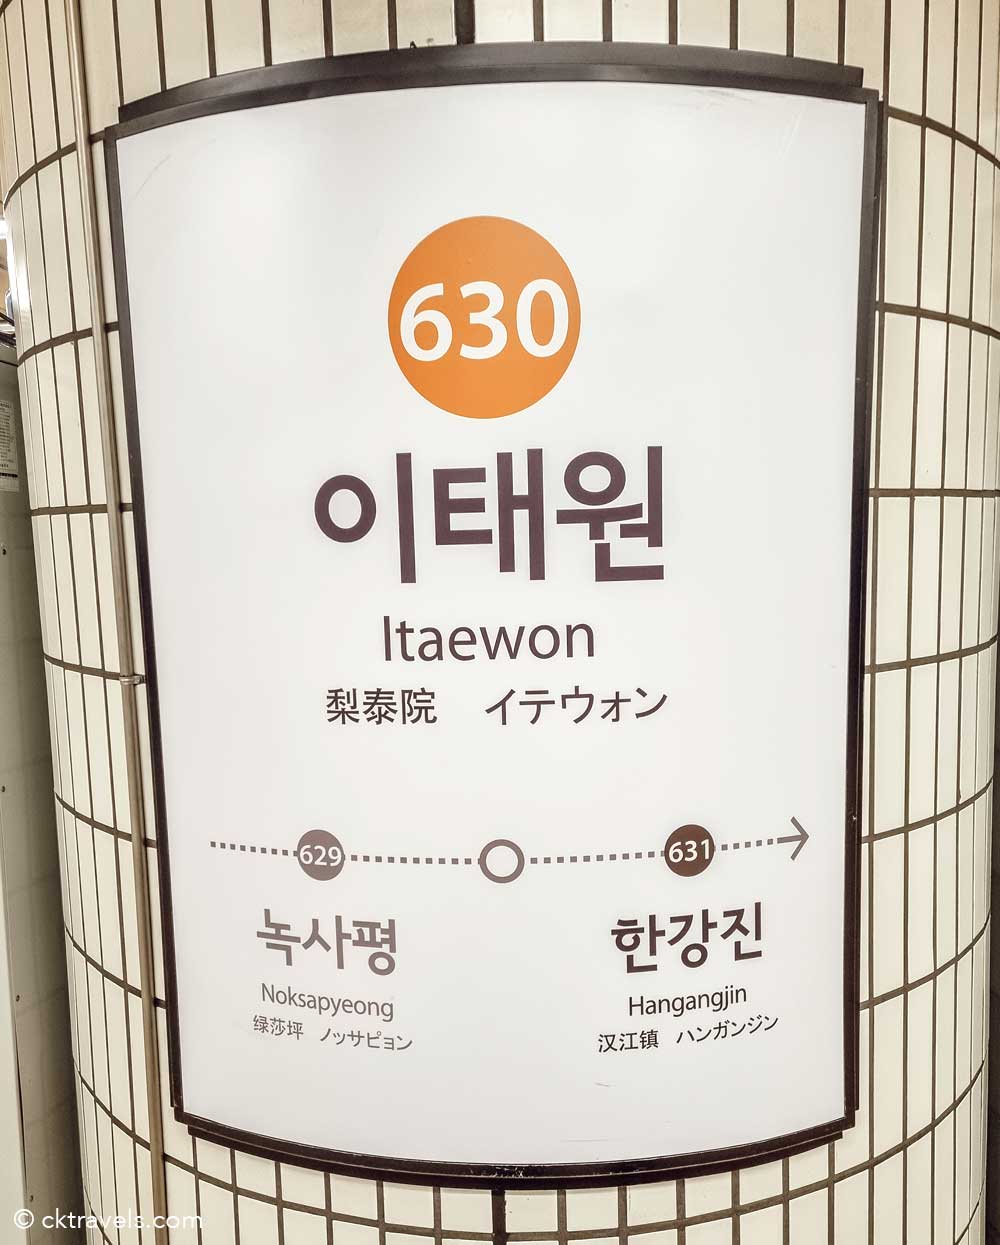 Itaewon, Seoul metro sign